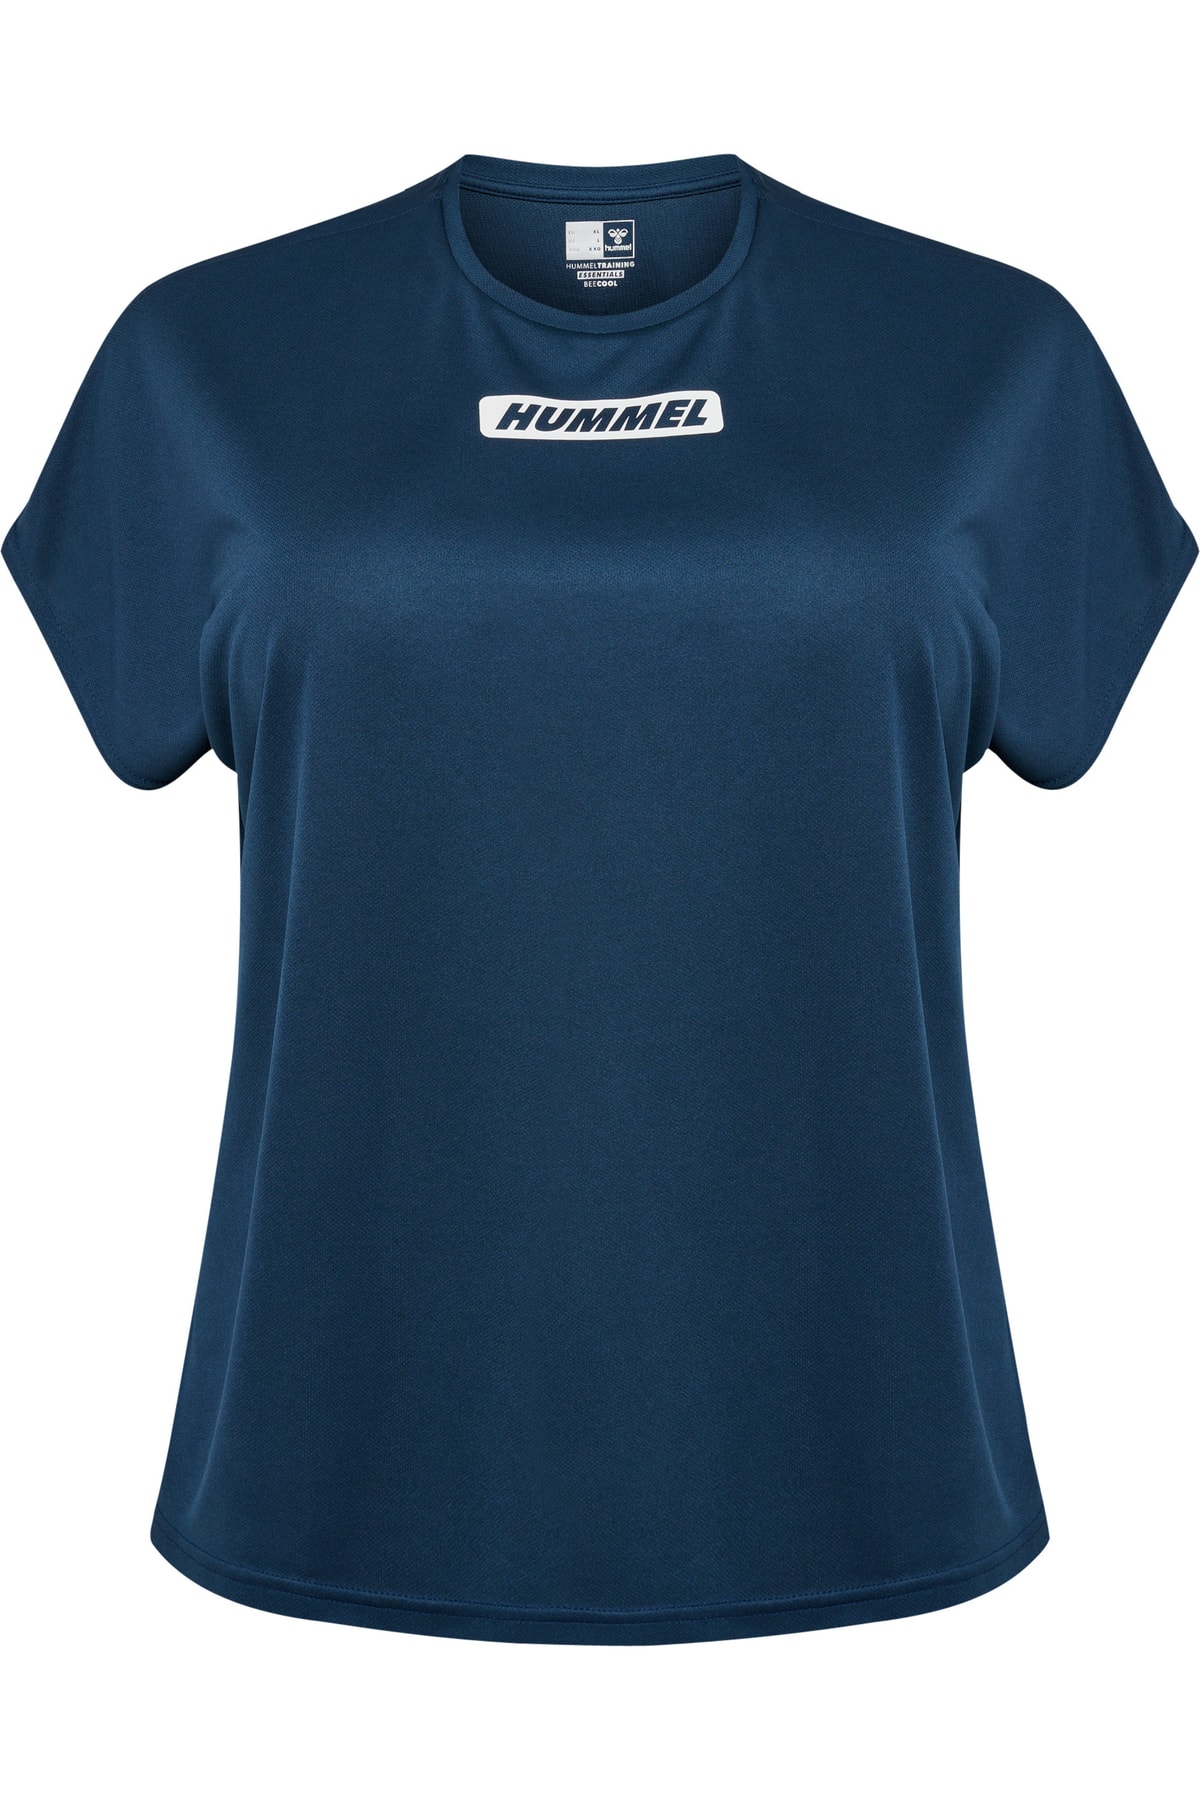 HUMMEL T-Shirt Blau Relaxed Fit